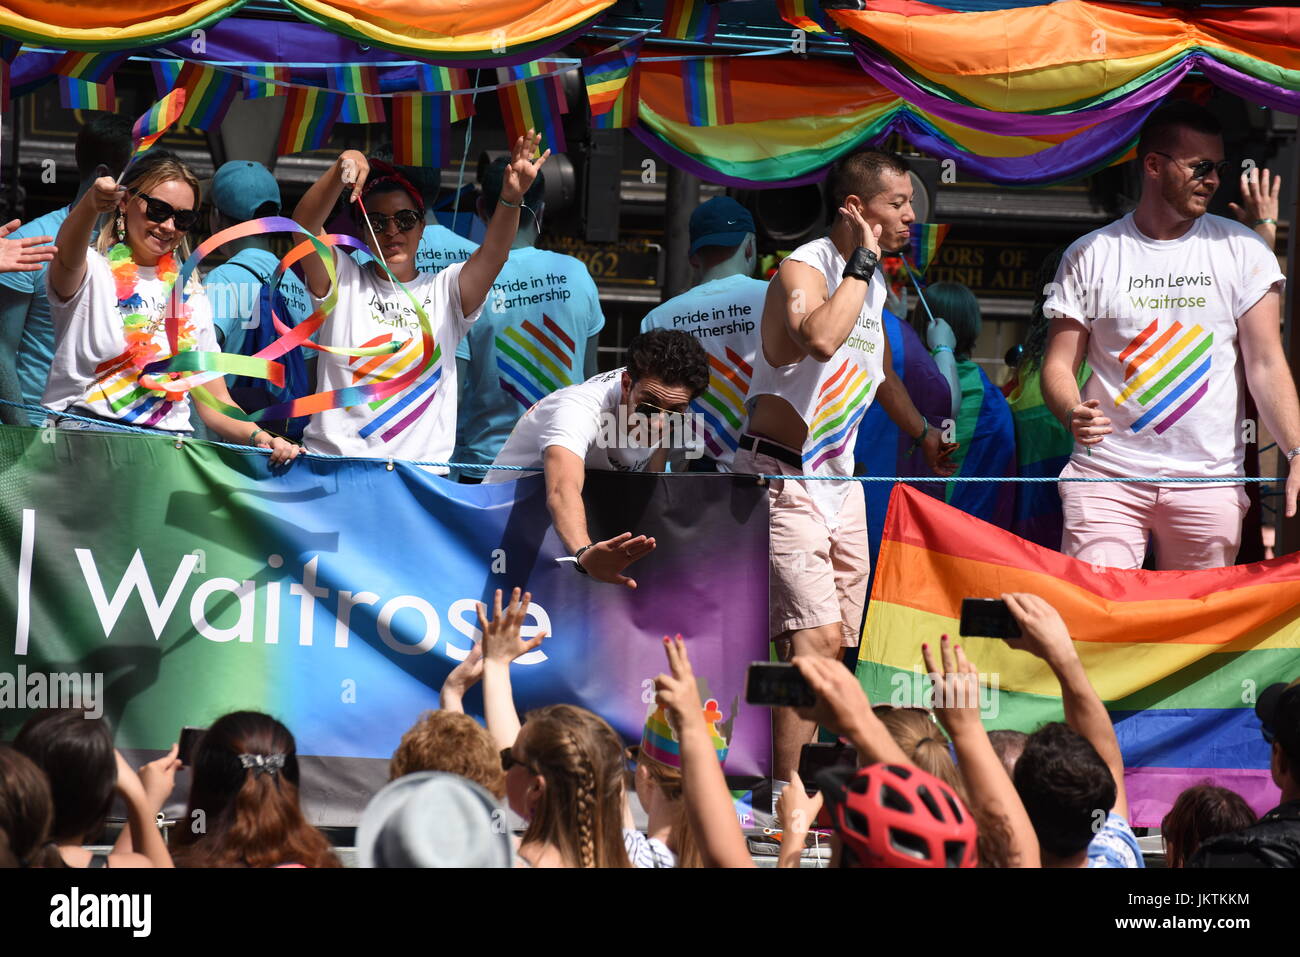 John Lewis Waitrose representatives on the rainbow truck at the Pride in London parade, 2017. Stock Photo